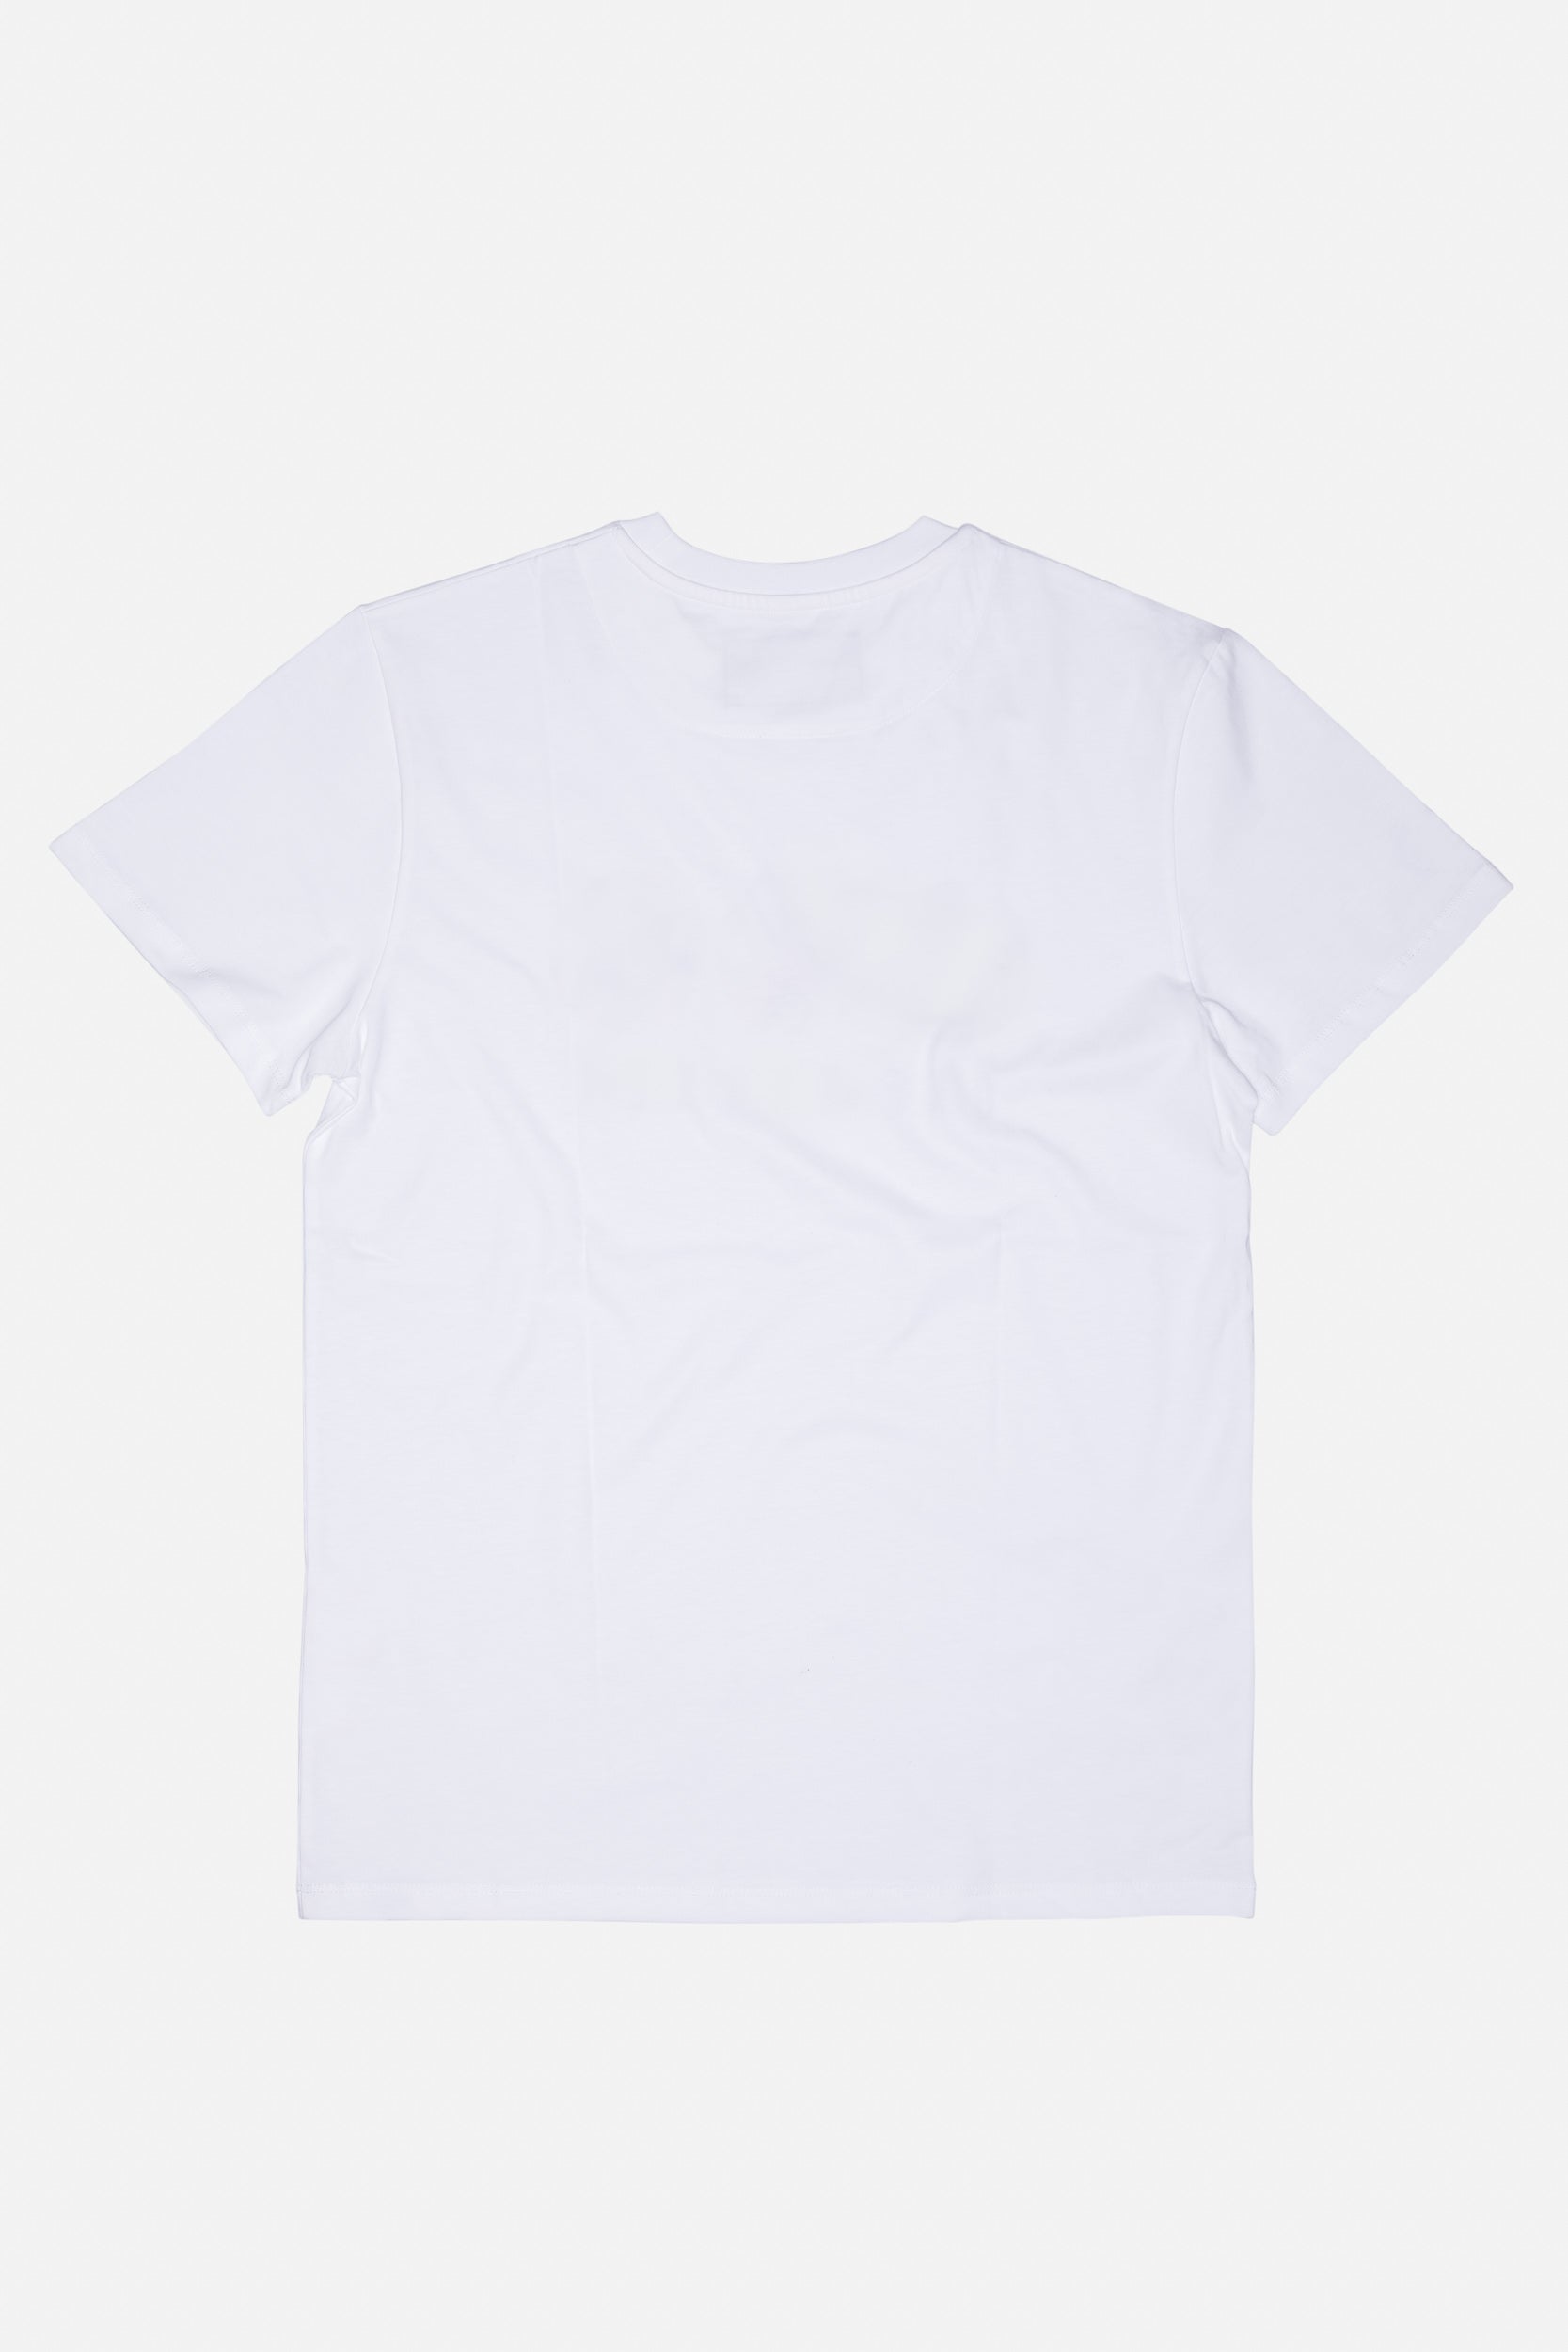 T-shirt Urban Life unisex - White